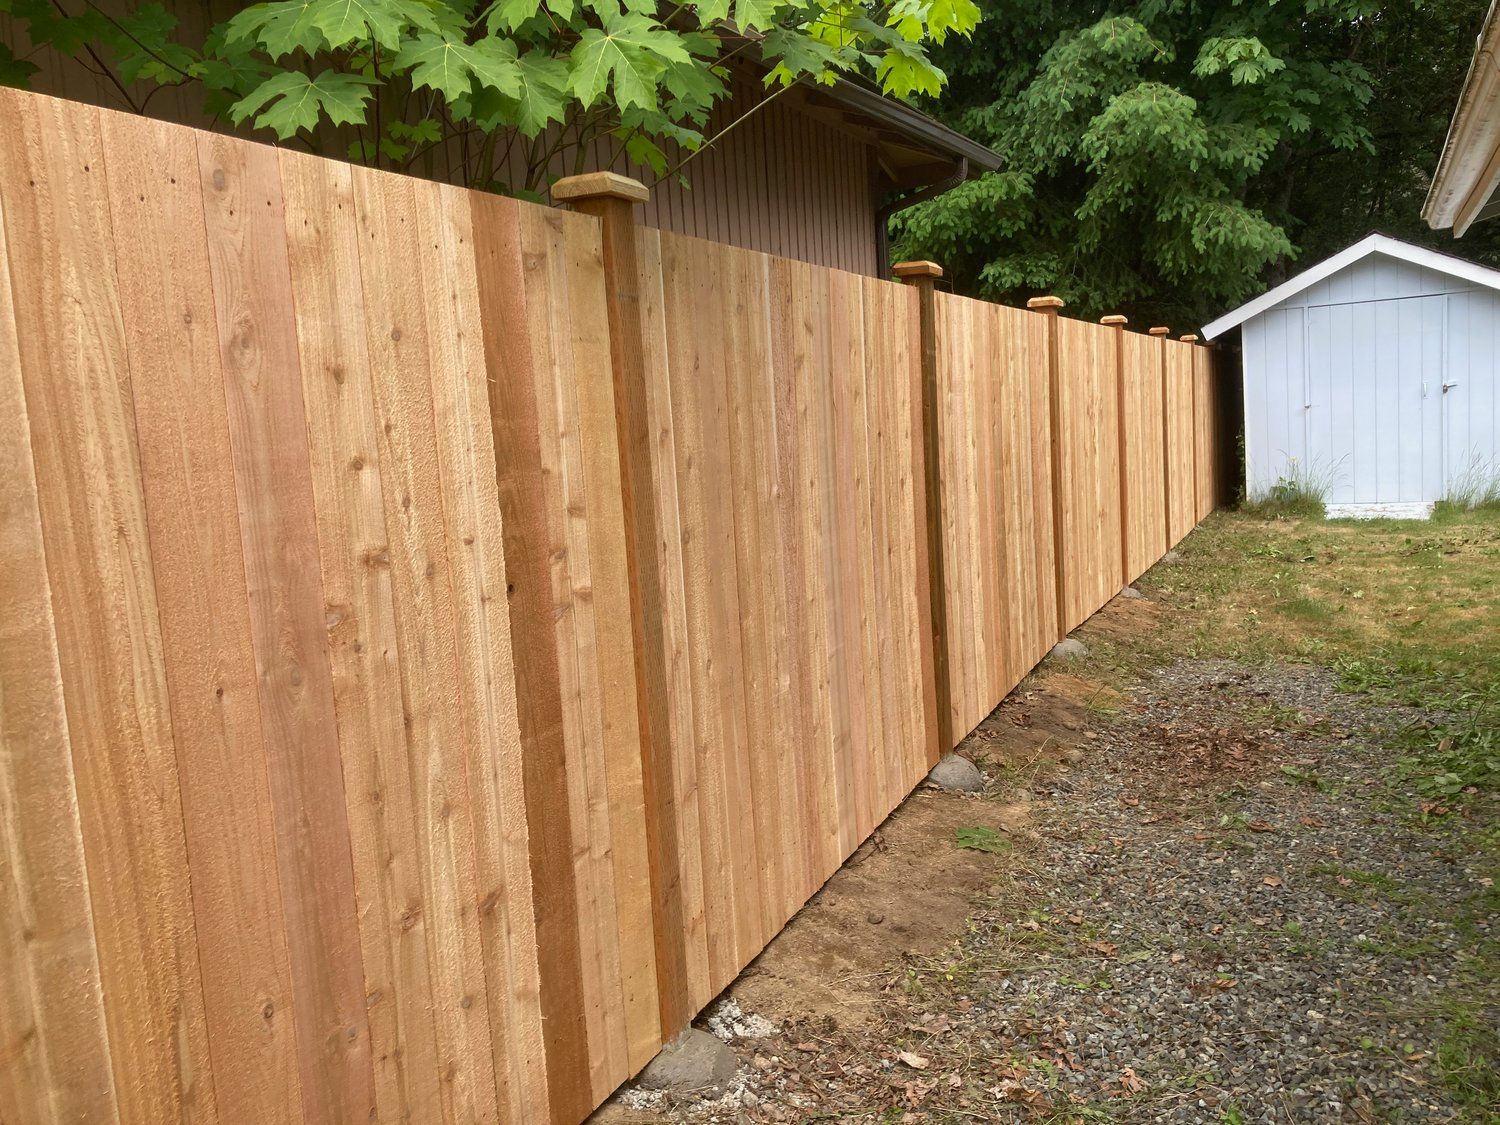 Cedar wood estate style fence on property line